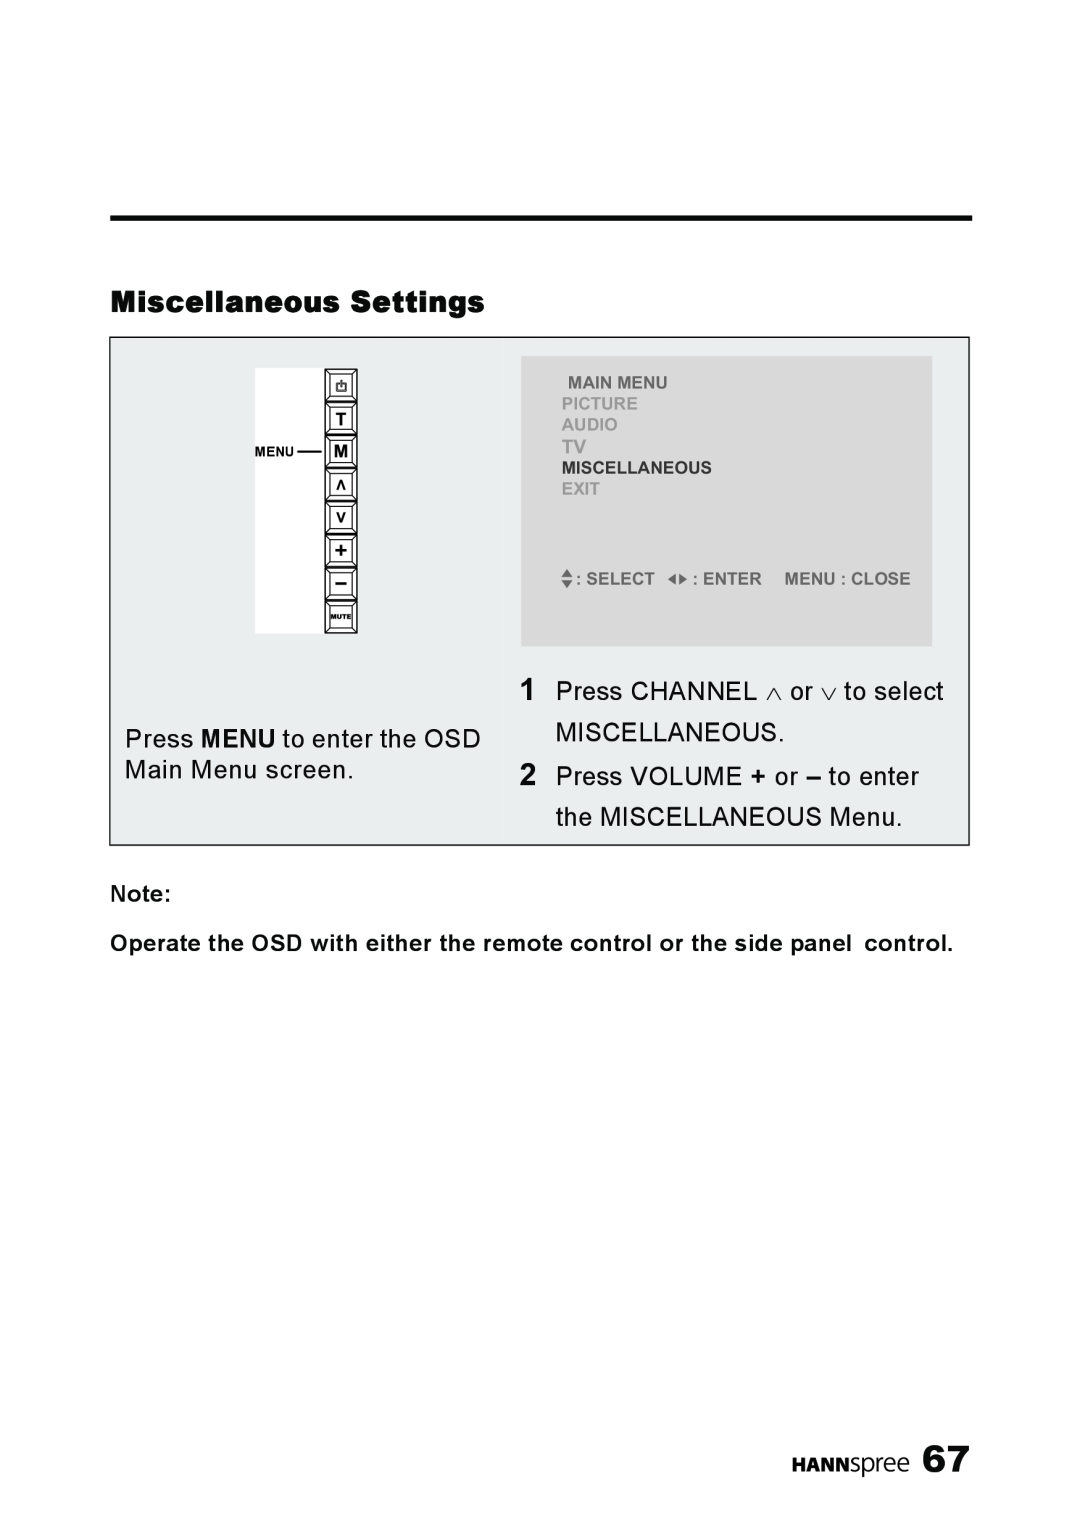 HANNspree LT11-23A1 user manual Miscellaneous Settings, Main Menu, Picture Audio, Exit, Select Enter Menu Close 